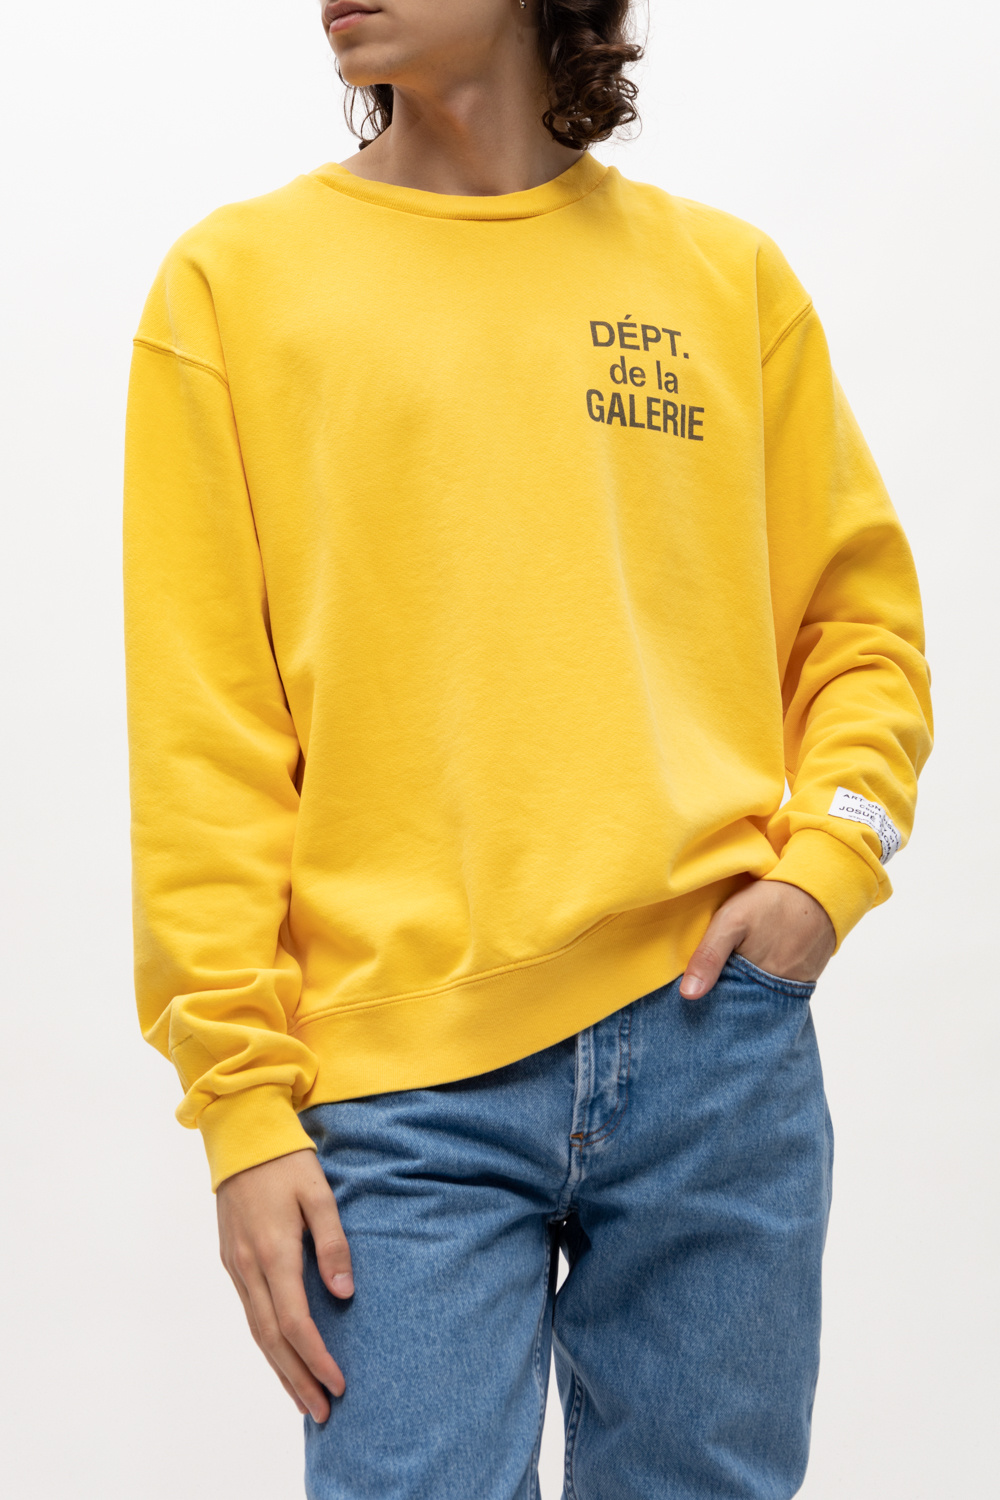 GALLERY DEPT. sweatshirt Jacket with logo